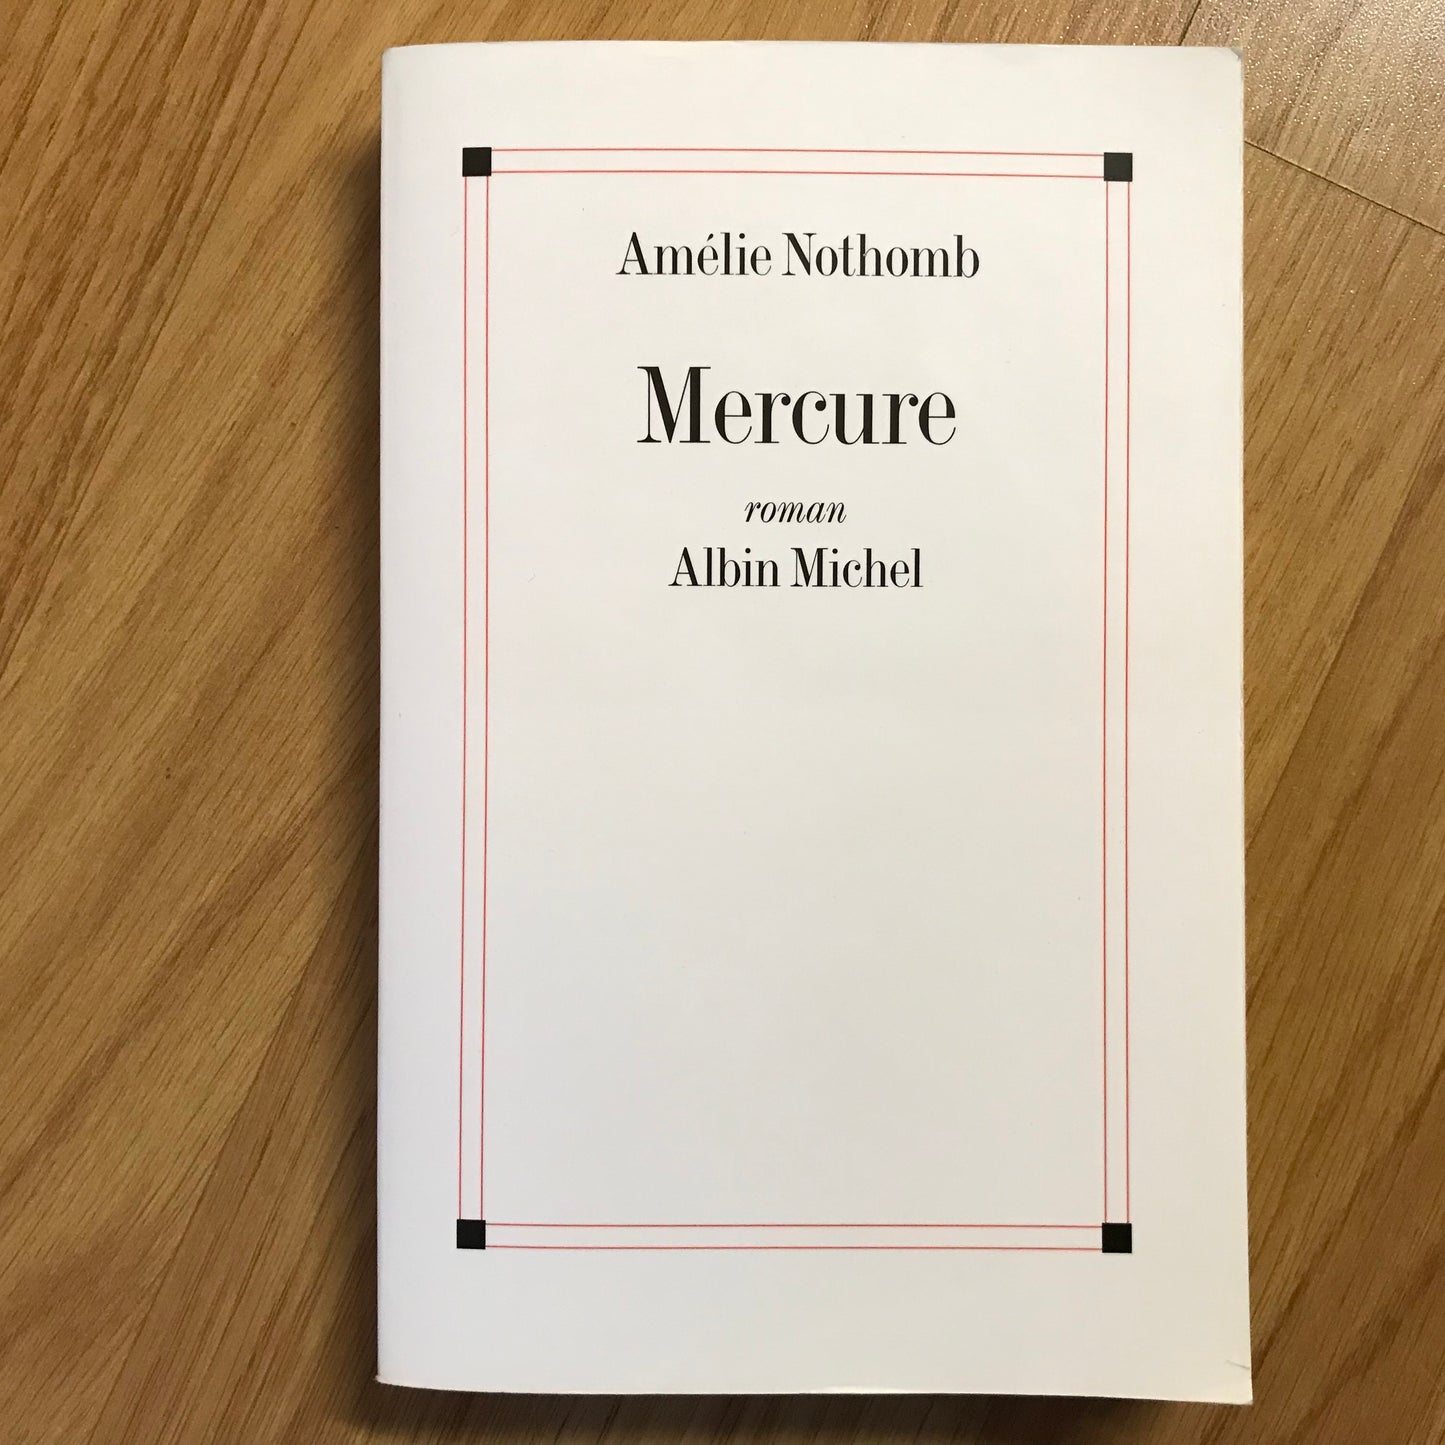 Nothomb, Amélie - Mercure